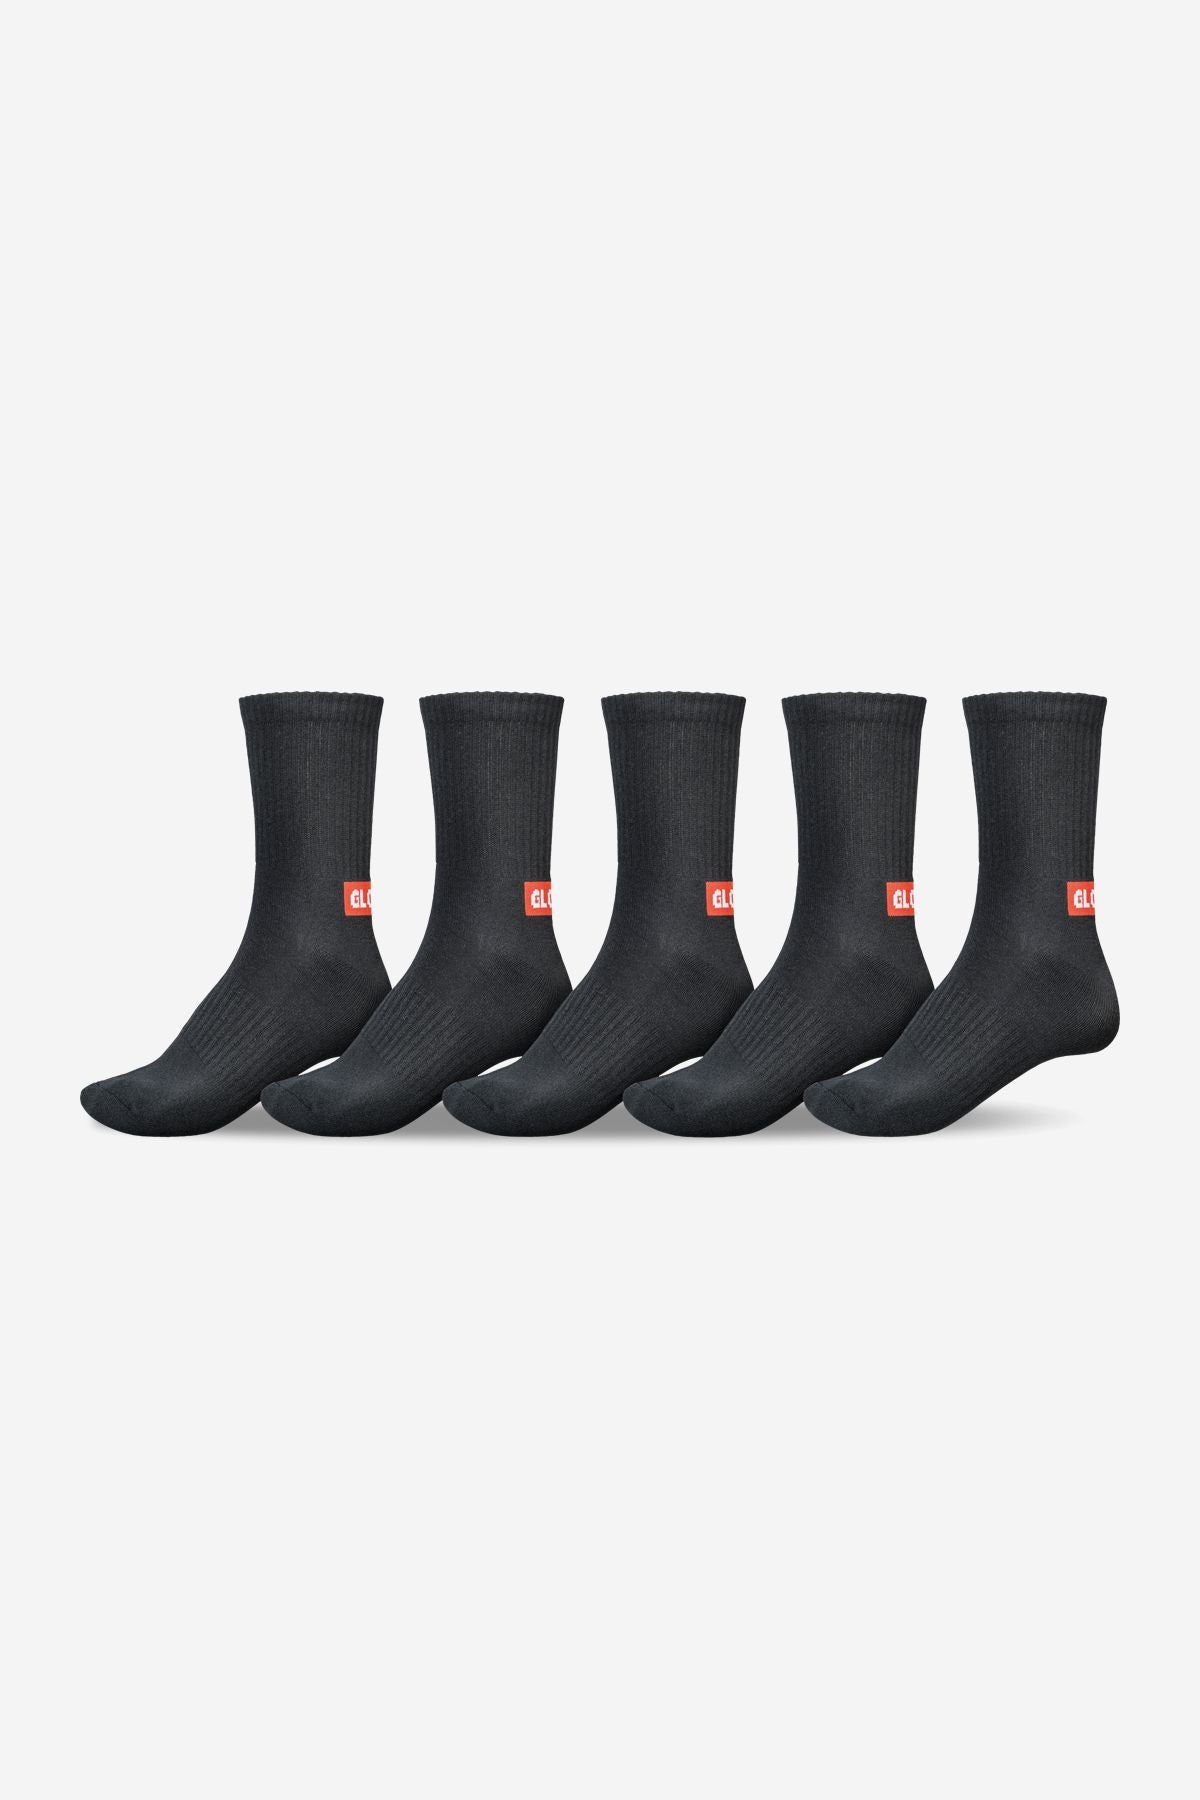 Minibar Crew Sock 5 Pack Black